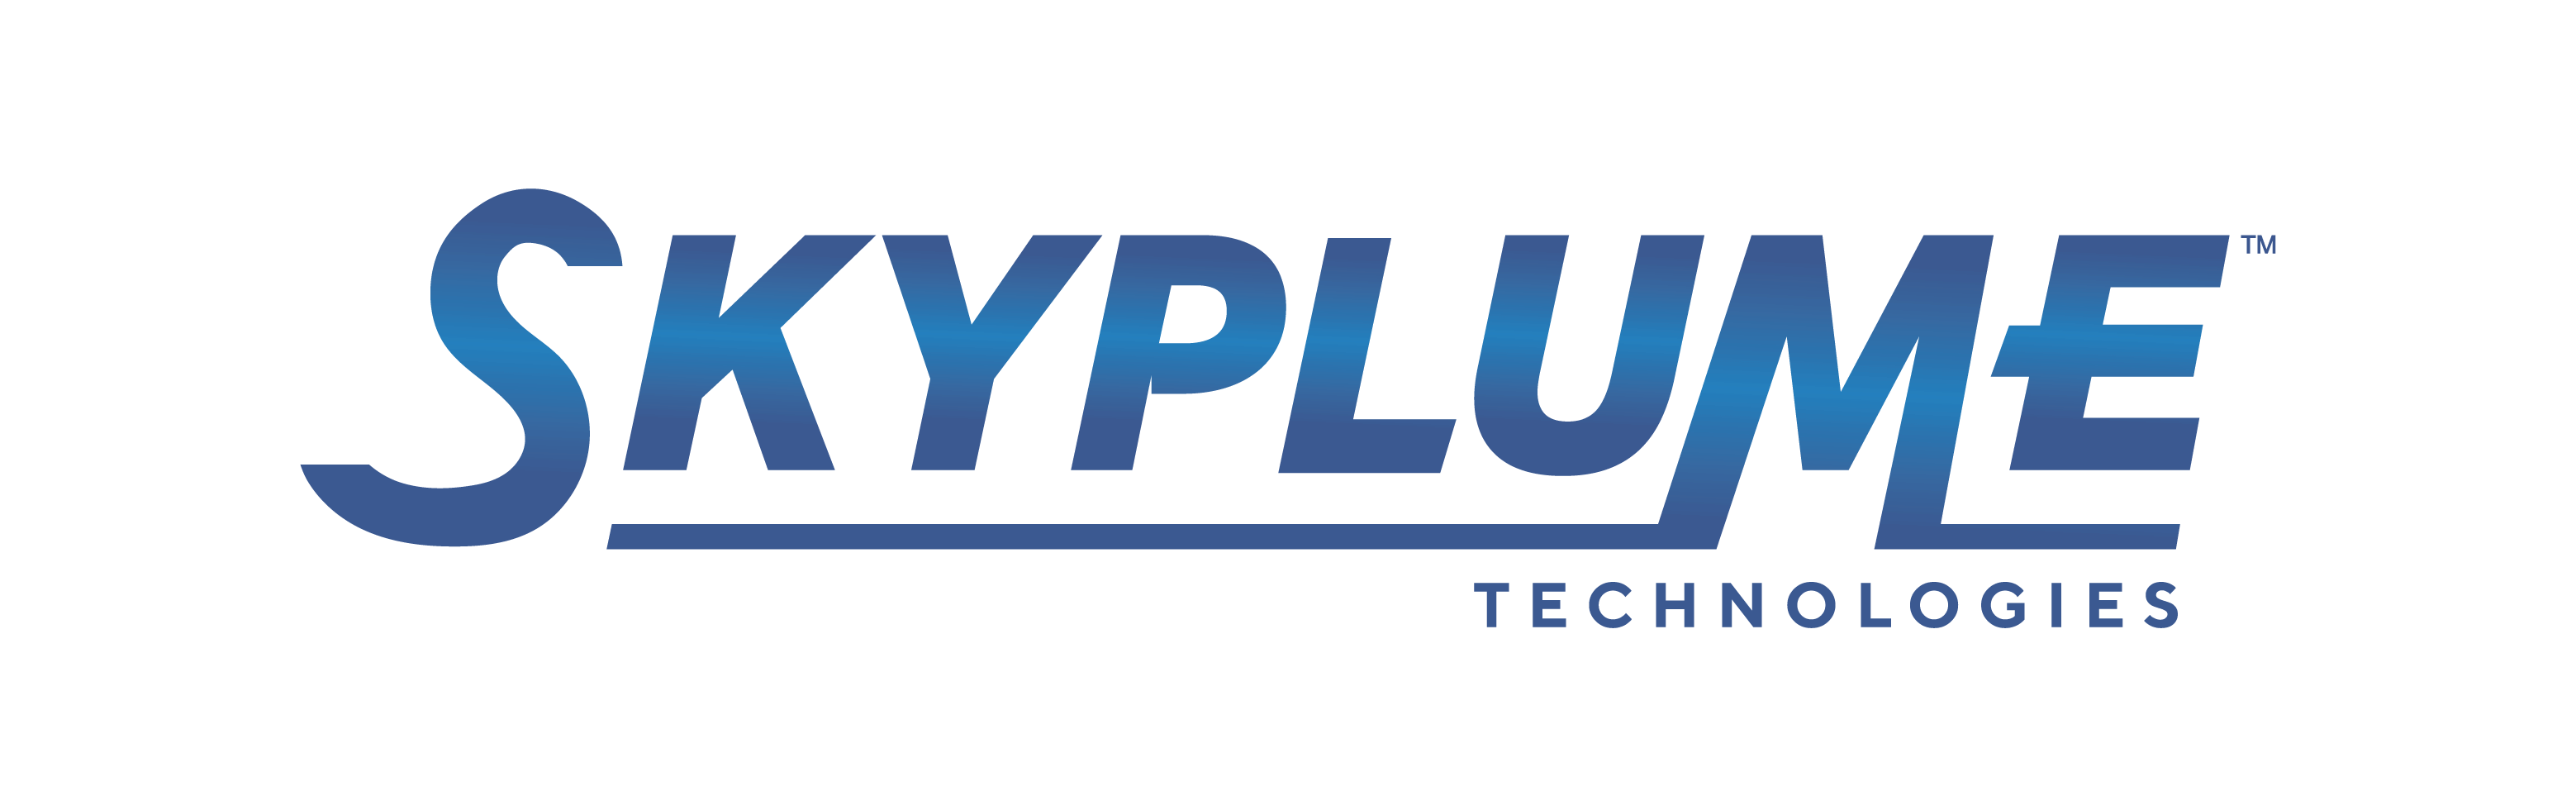 SKYPLUME Technologies (a division of Plasticair Inc.)